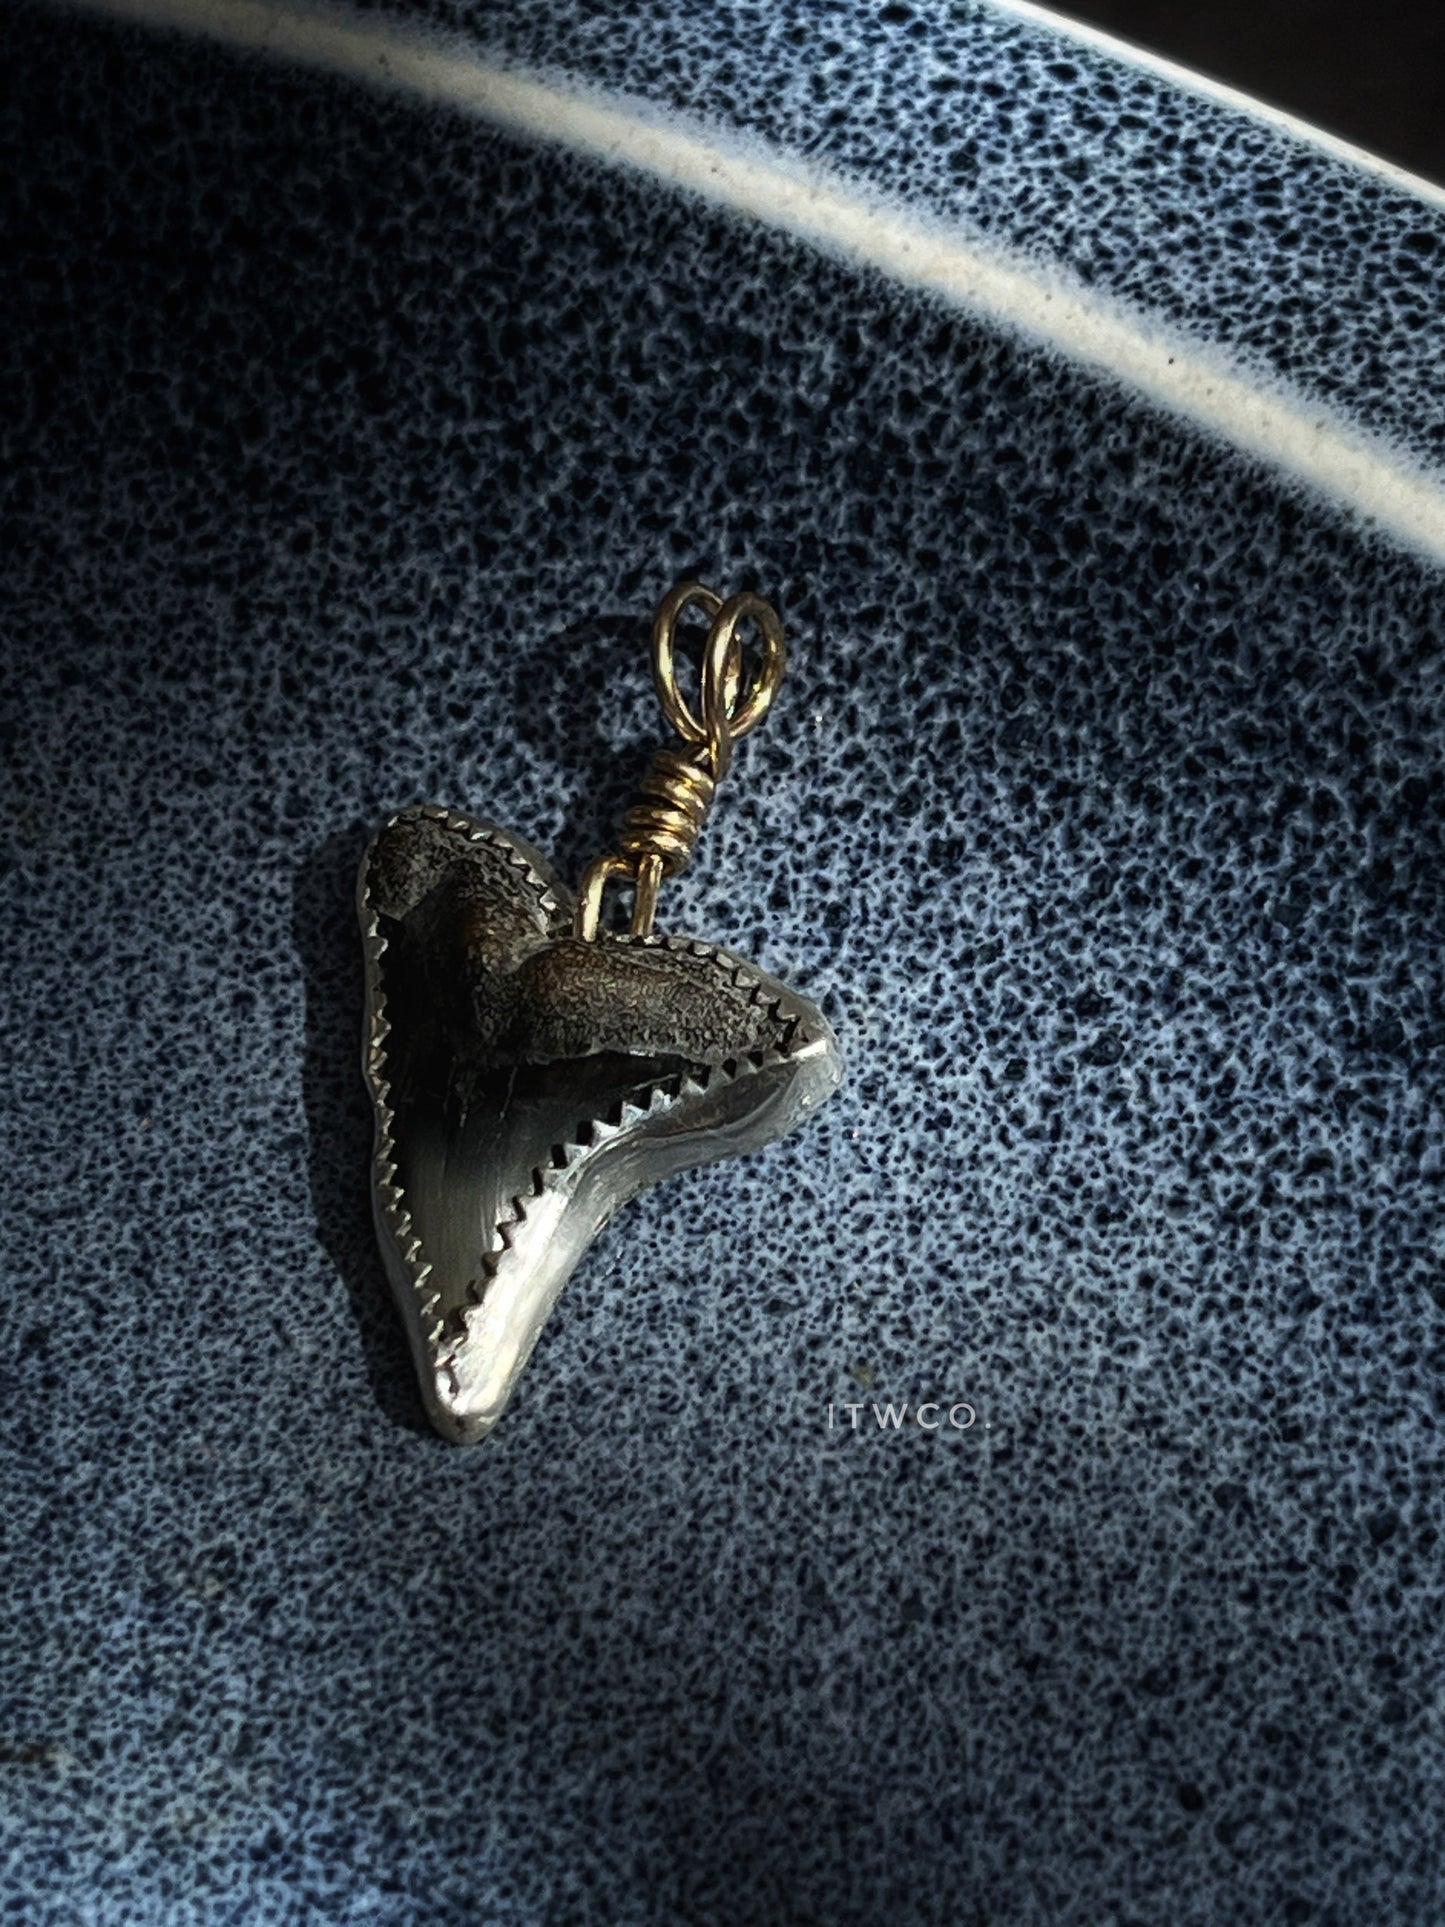 Mixed Metal Shark Tooth Necklace